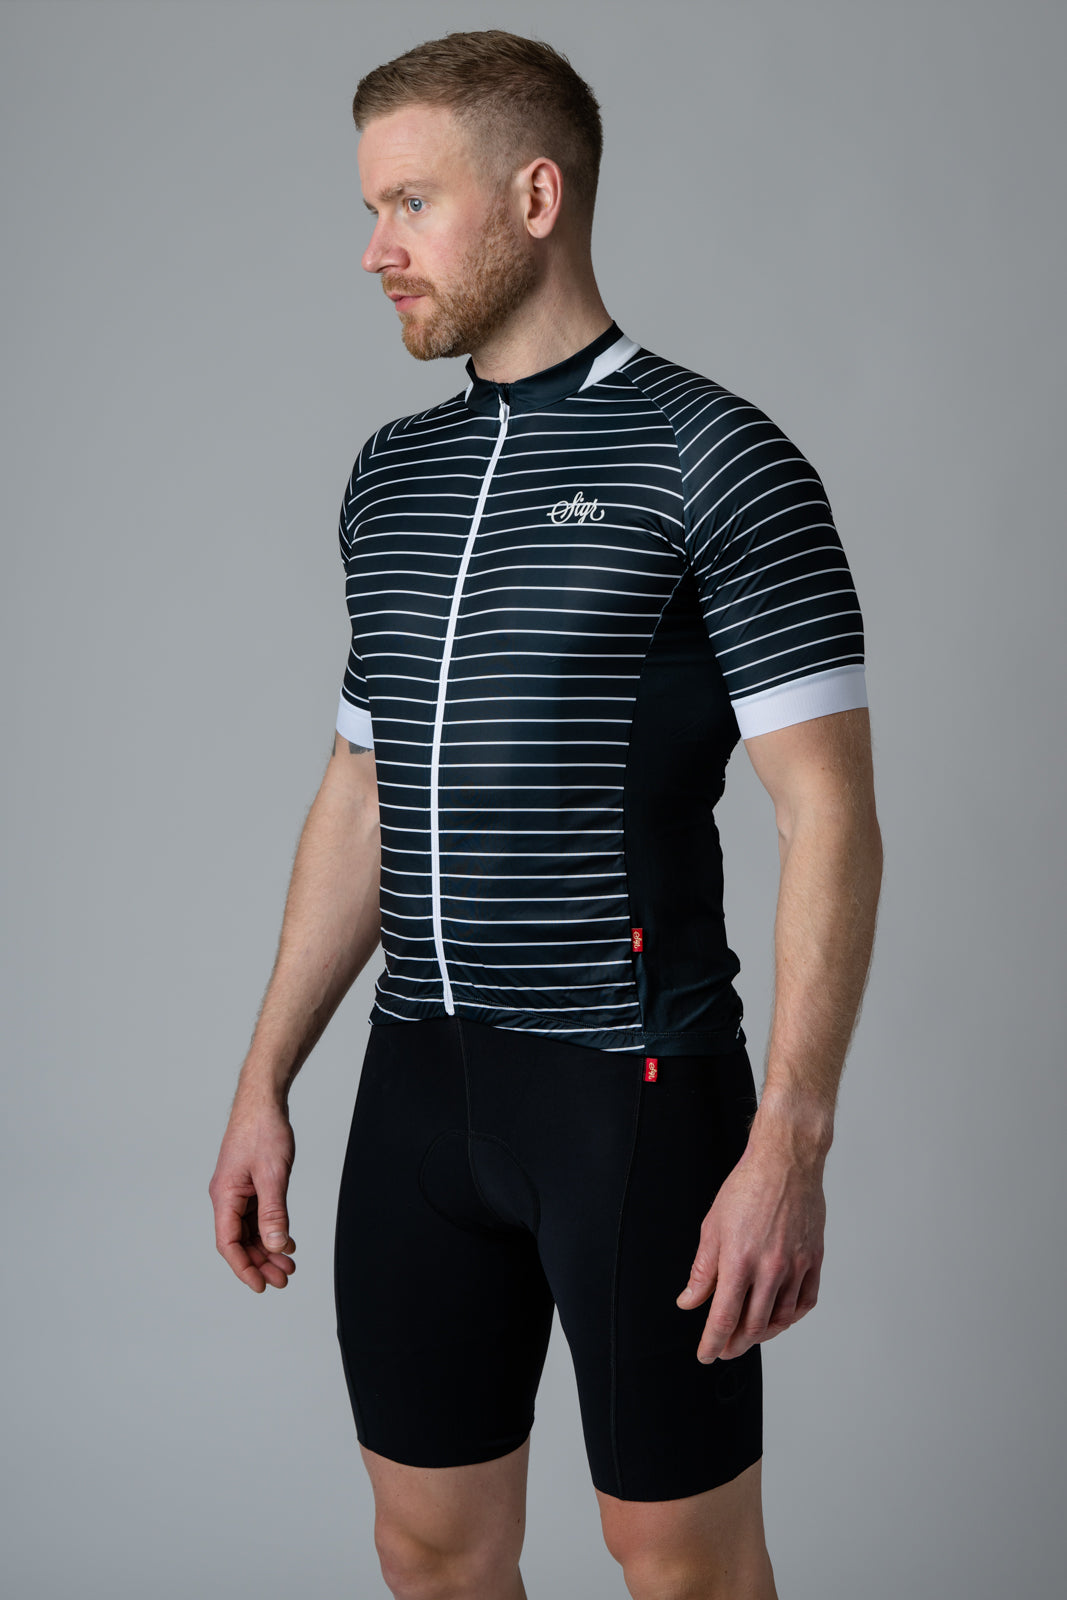 Cycling Jersey for Men -'Black Horizon' by Sigr Swedish Bikewear